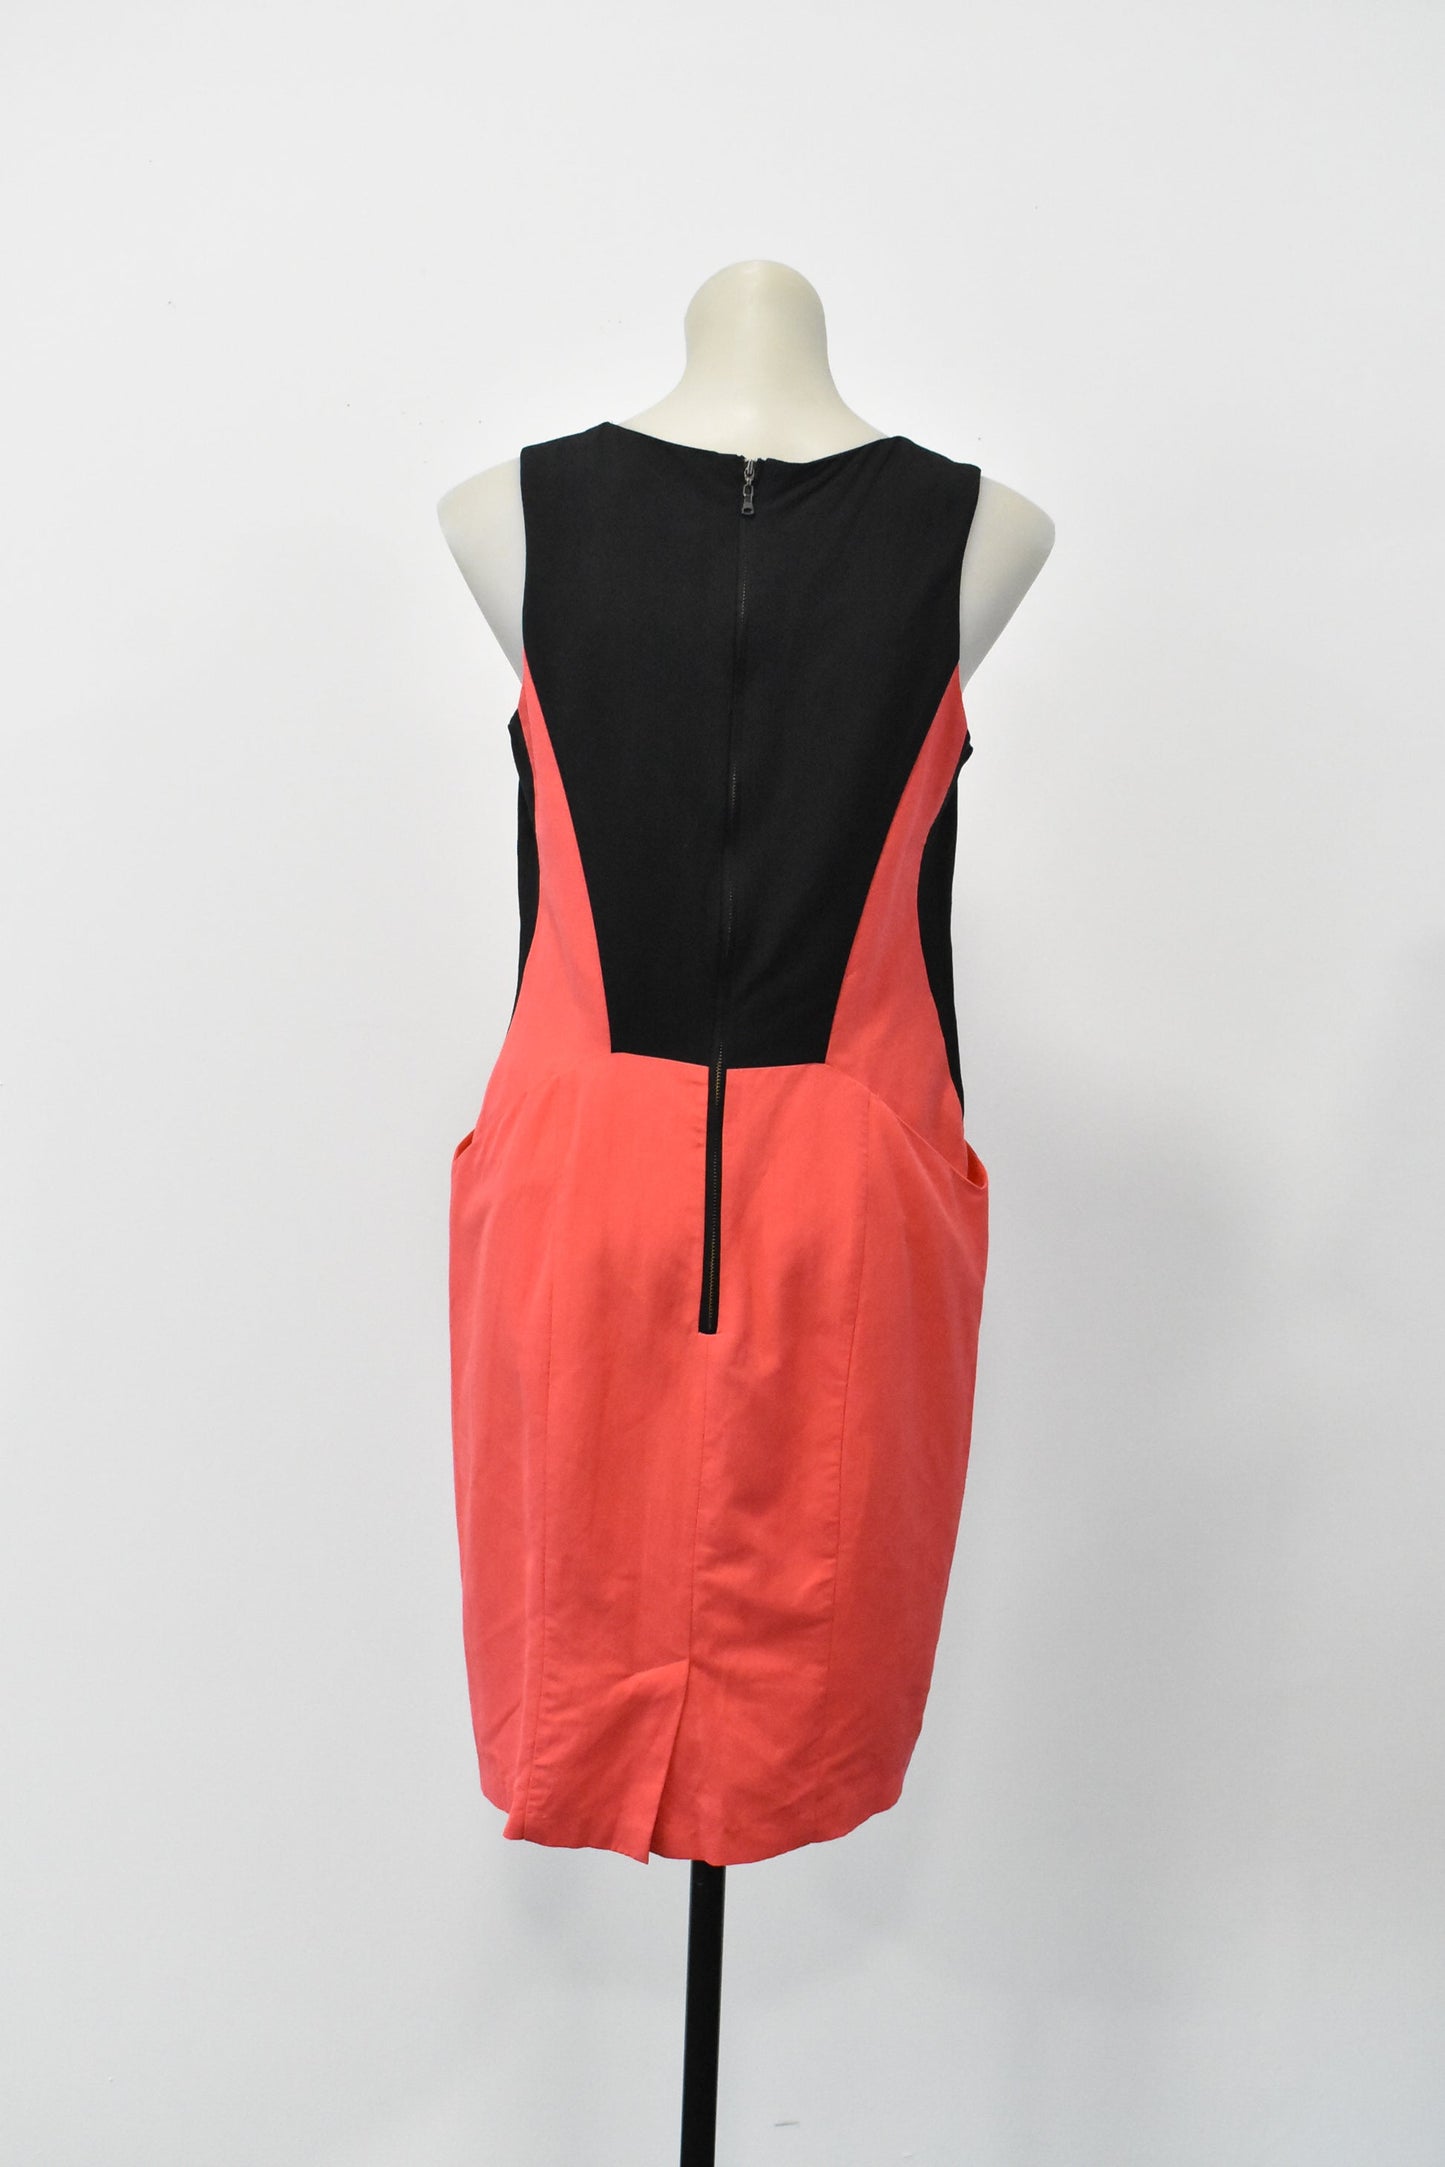 NEW Veronika Maine coral red sleeveless dress, size 10